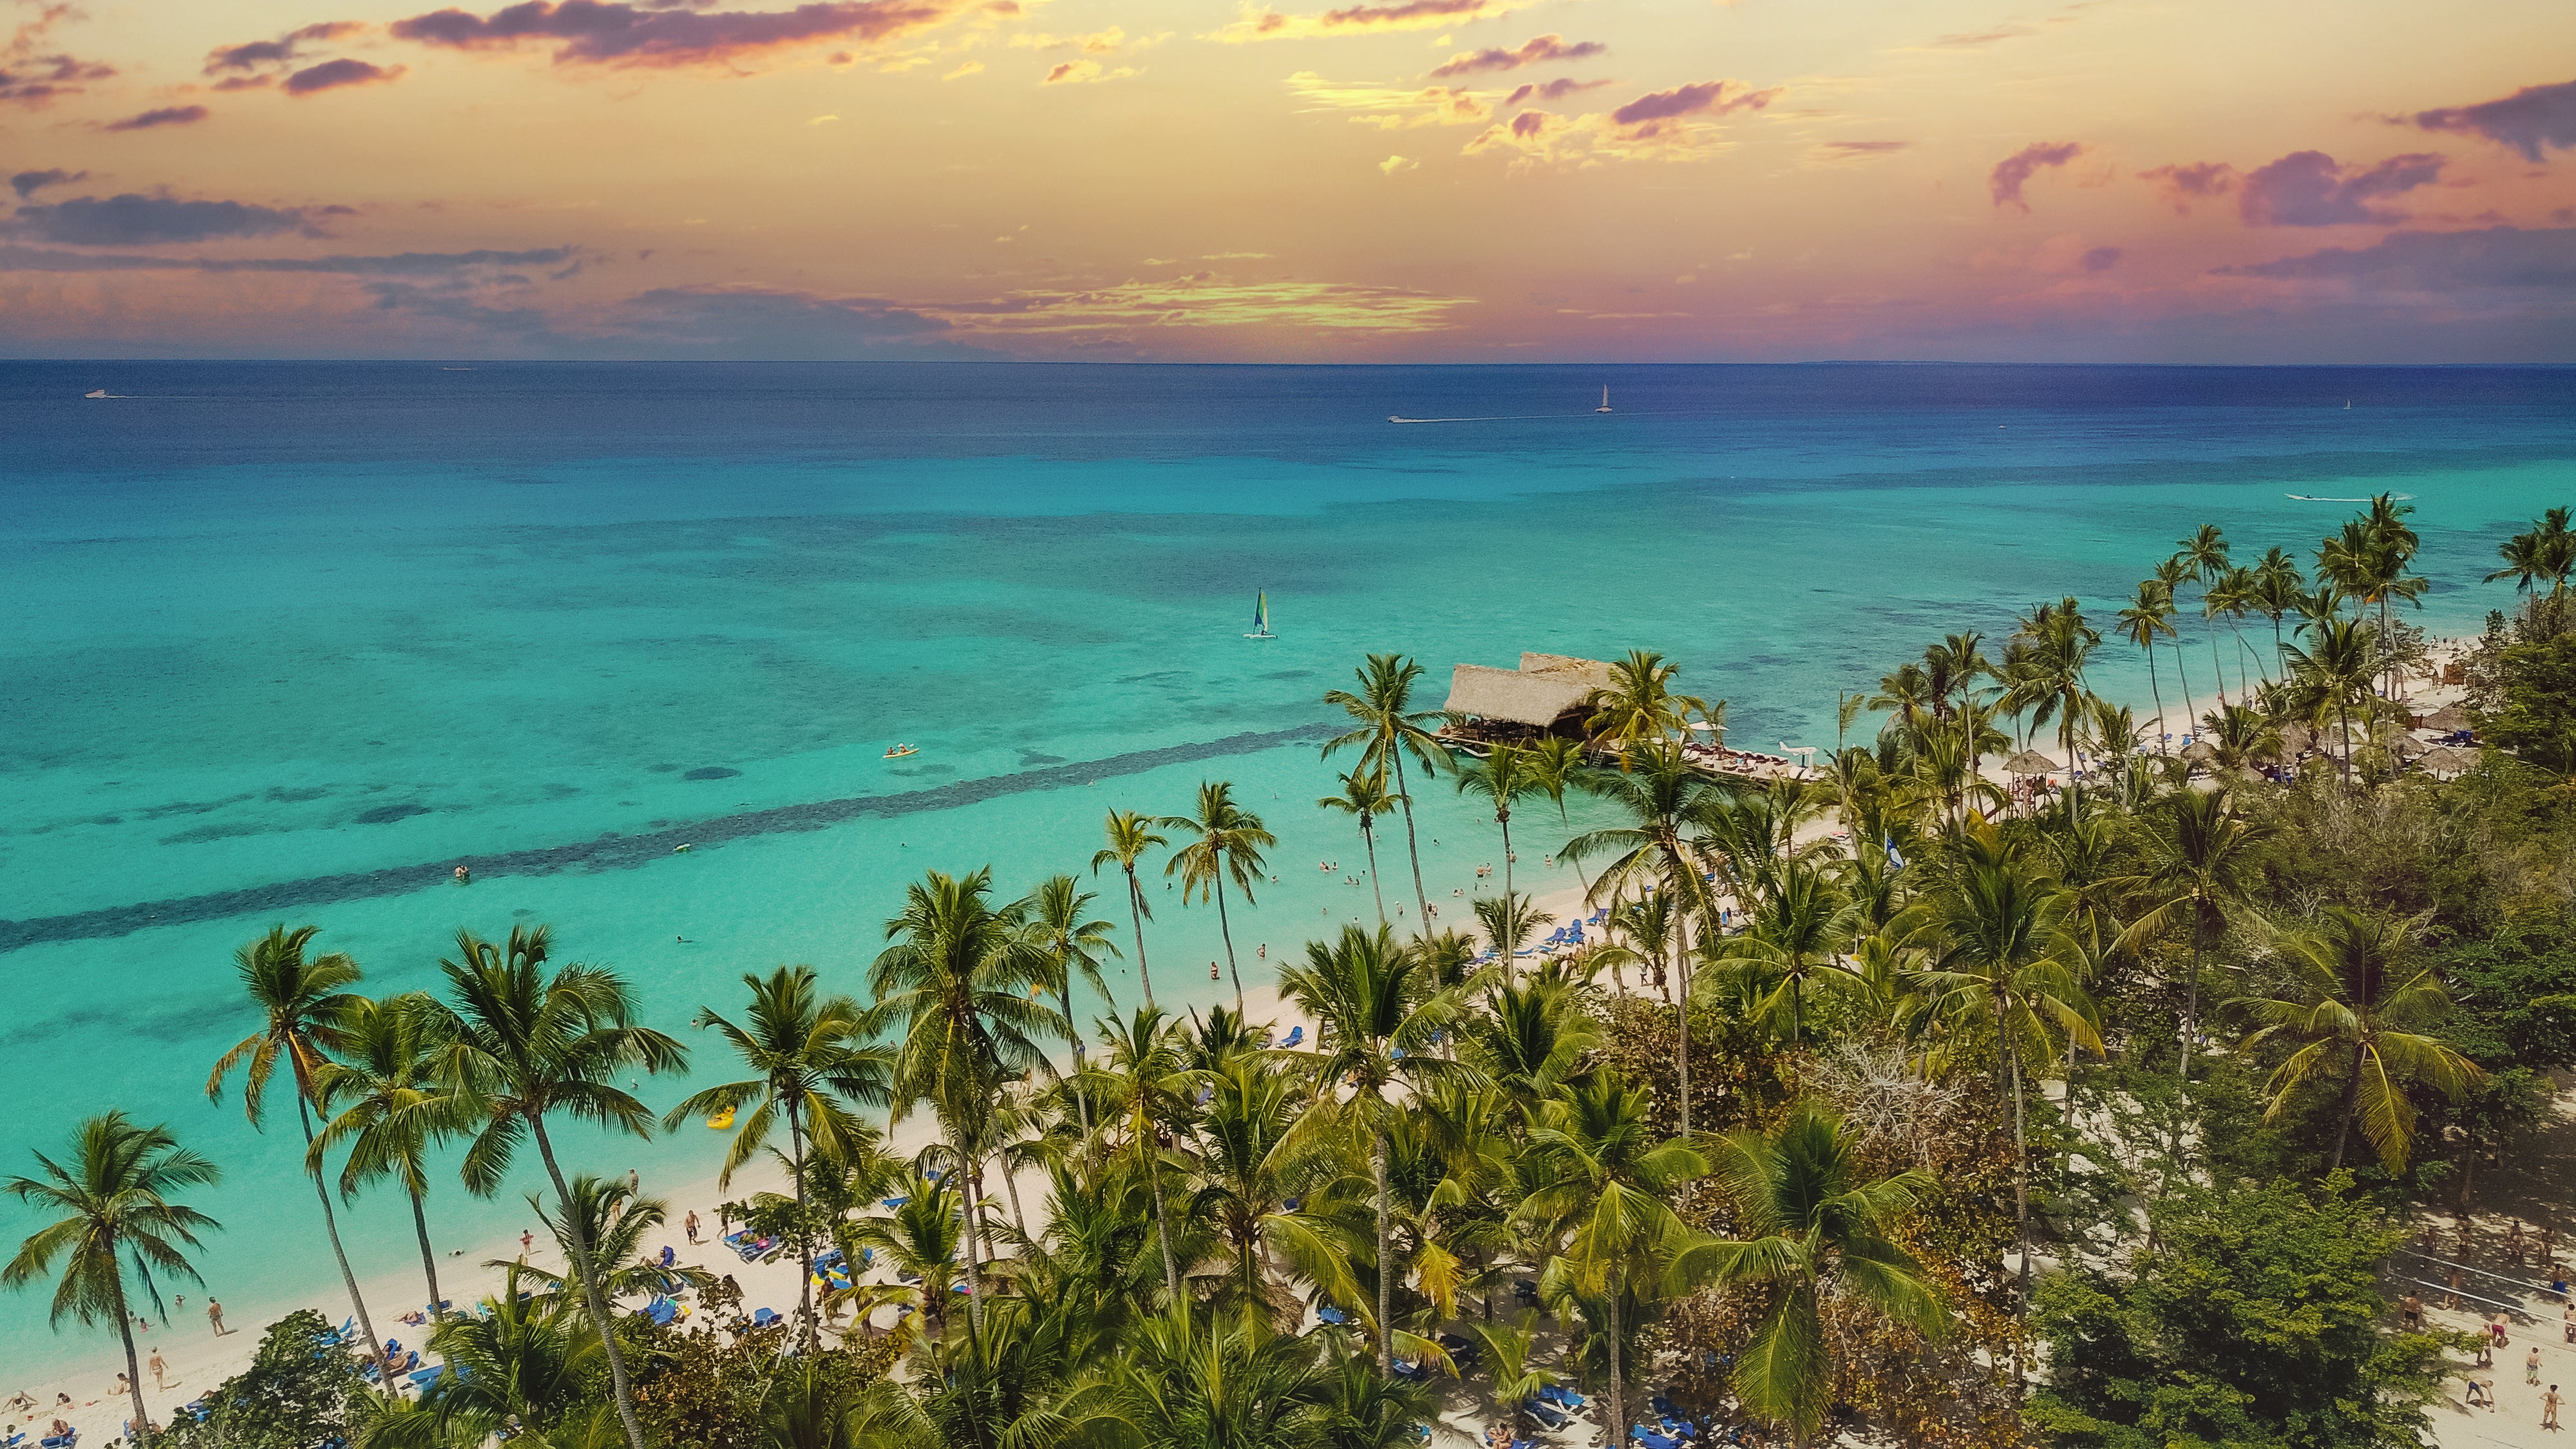 Palm-fringed beaches line the Caribbean island’s coast